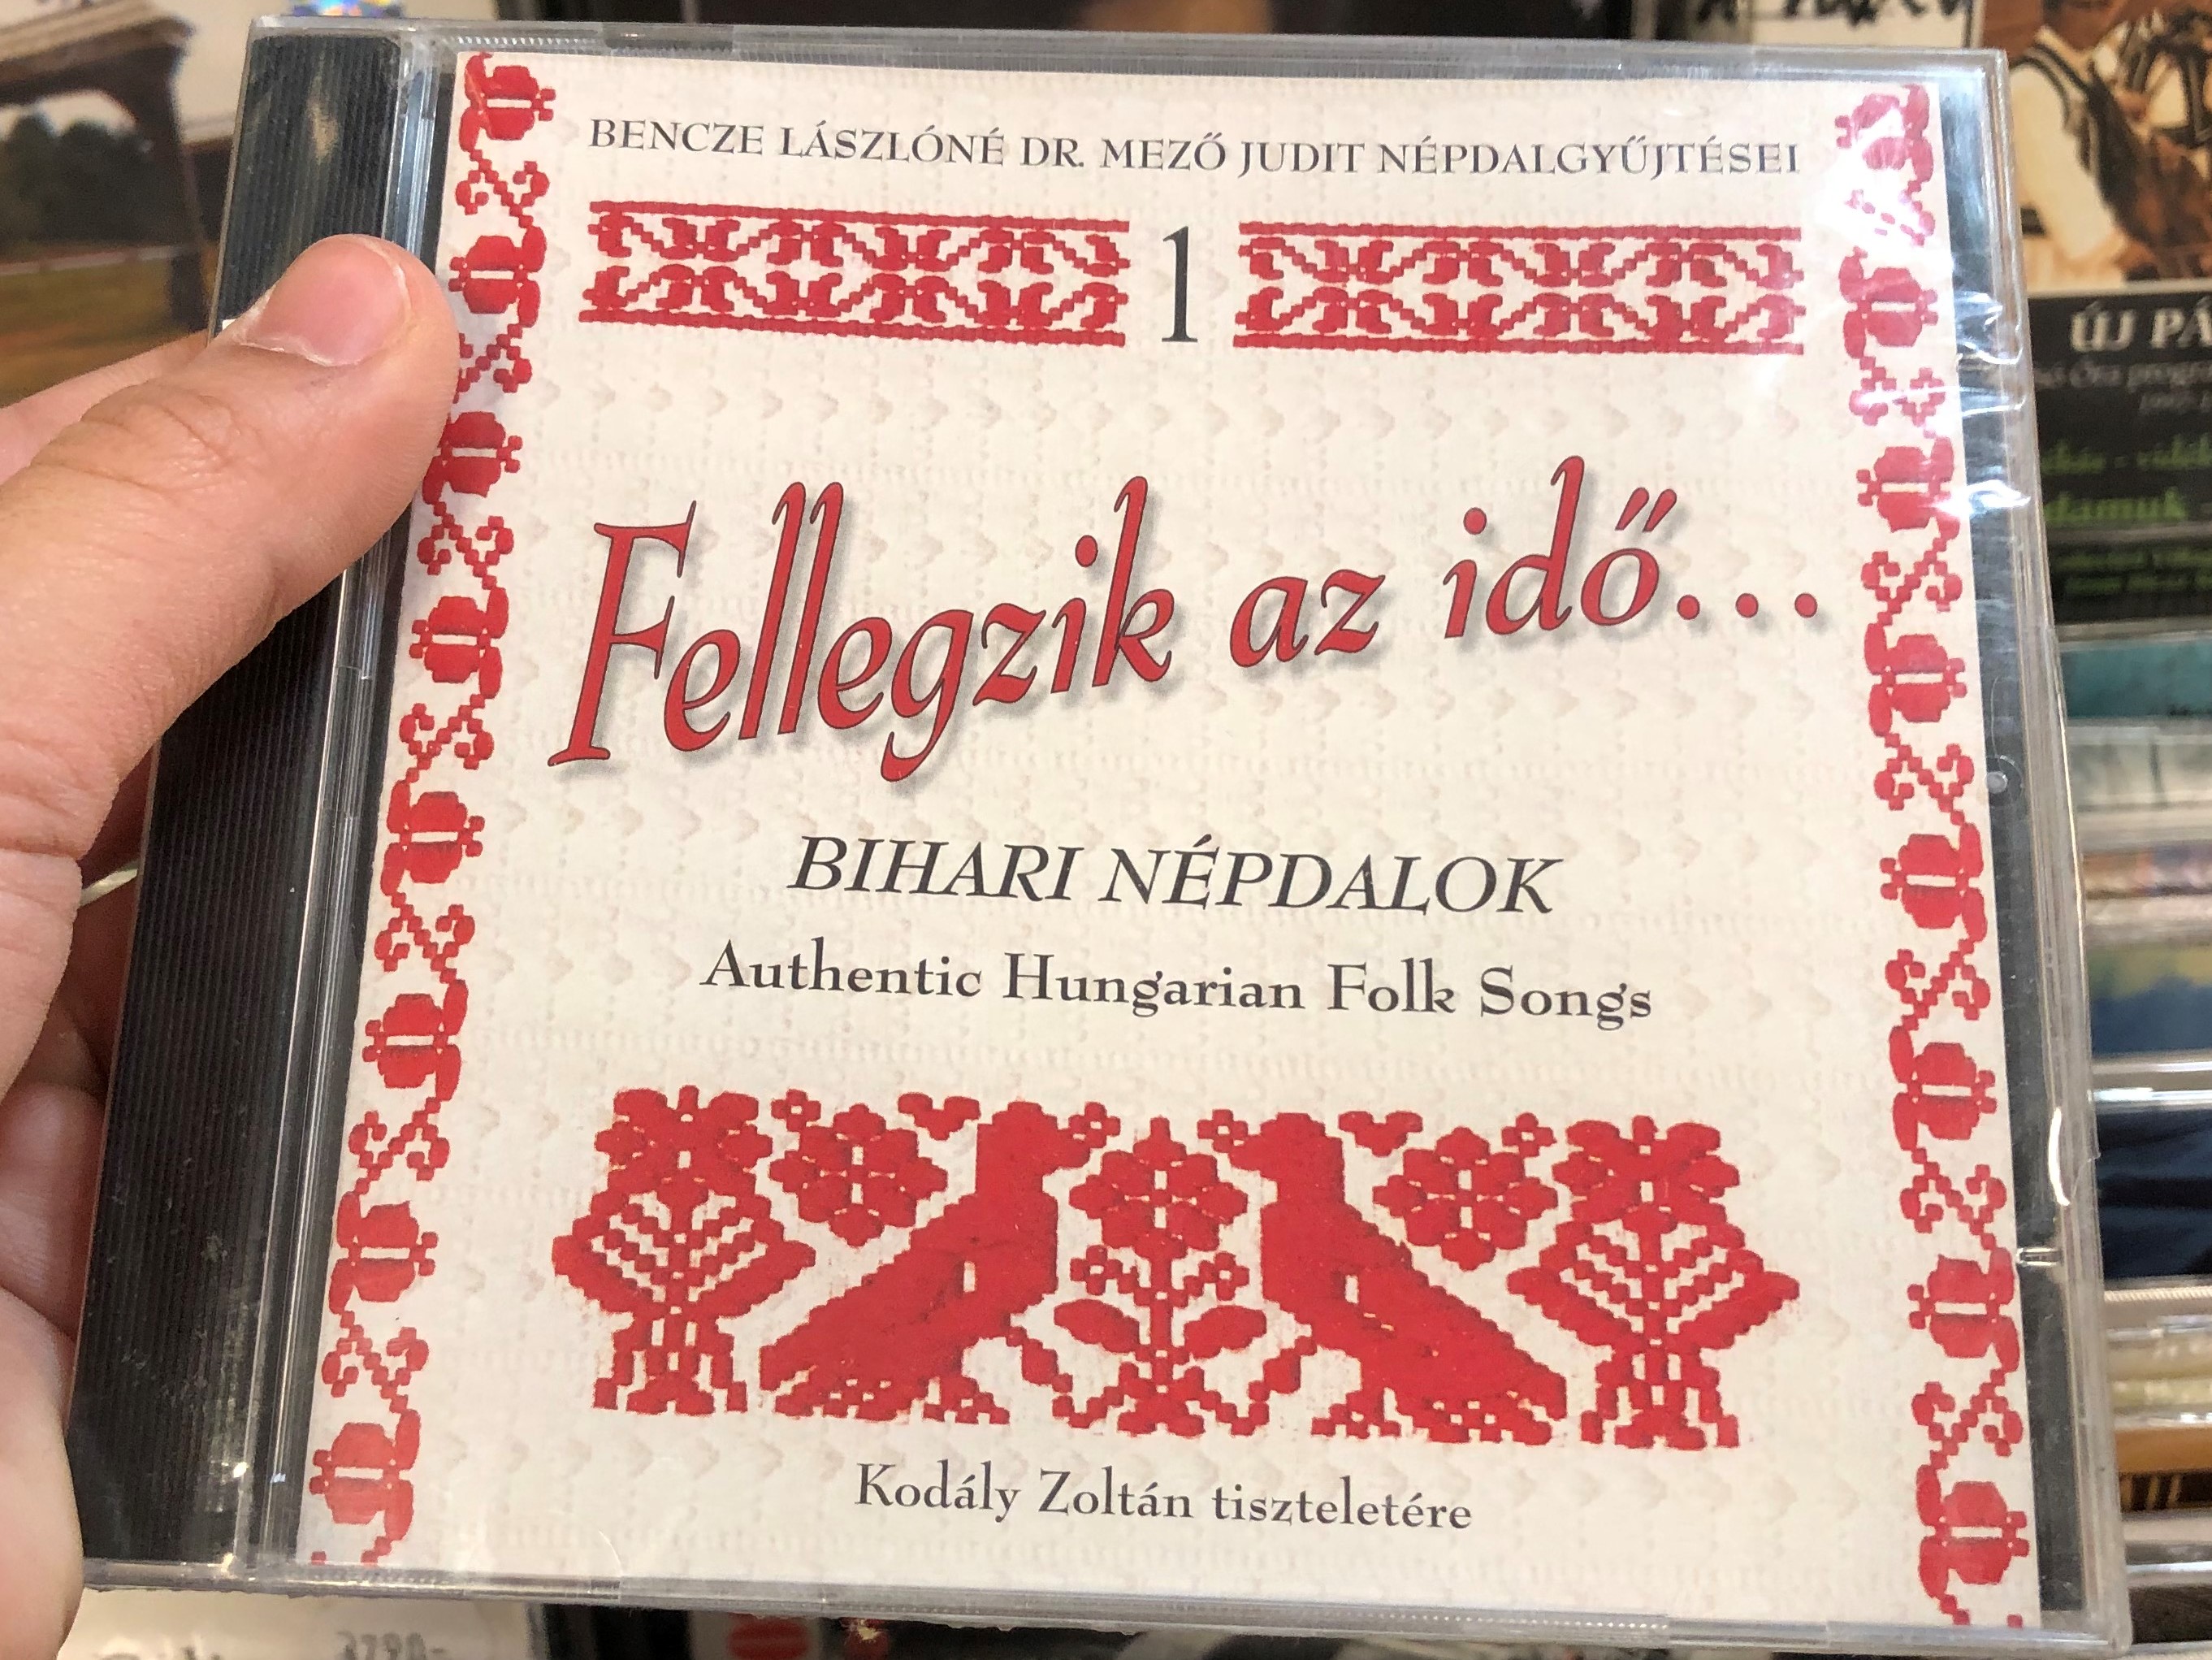 bencze-l-szl-n-dr.-mez-judit-fellegzik-az-id-bihari-n-pdalok-authentic-hungarian-folk-songs-kod-ly-zolt-n-tisztelet-re-dialekton-n-pzenei-kiad-audio-cd-2008-bs-cd-09-1-.jpg